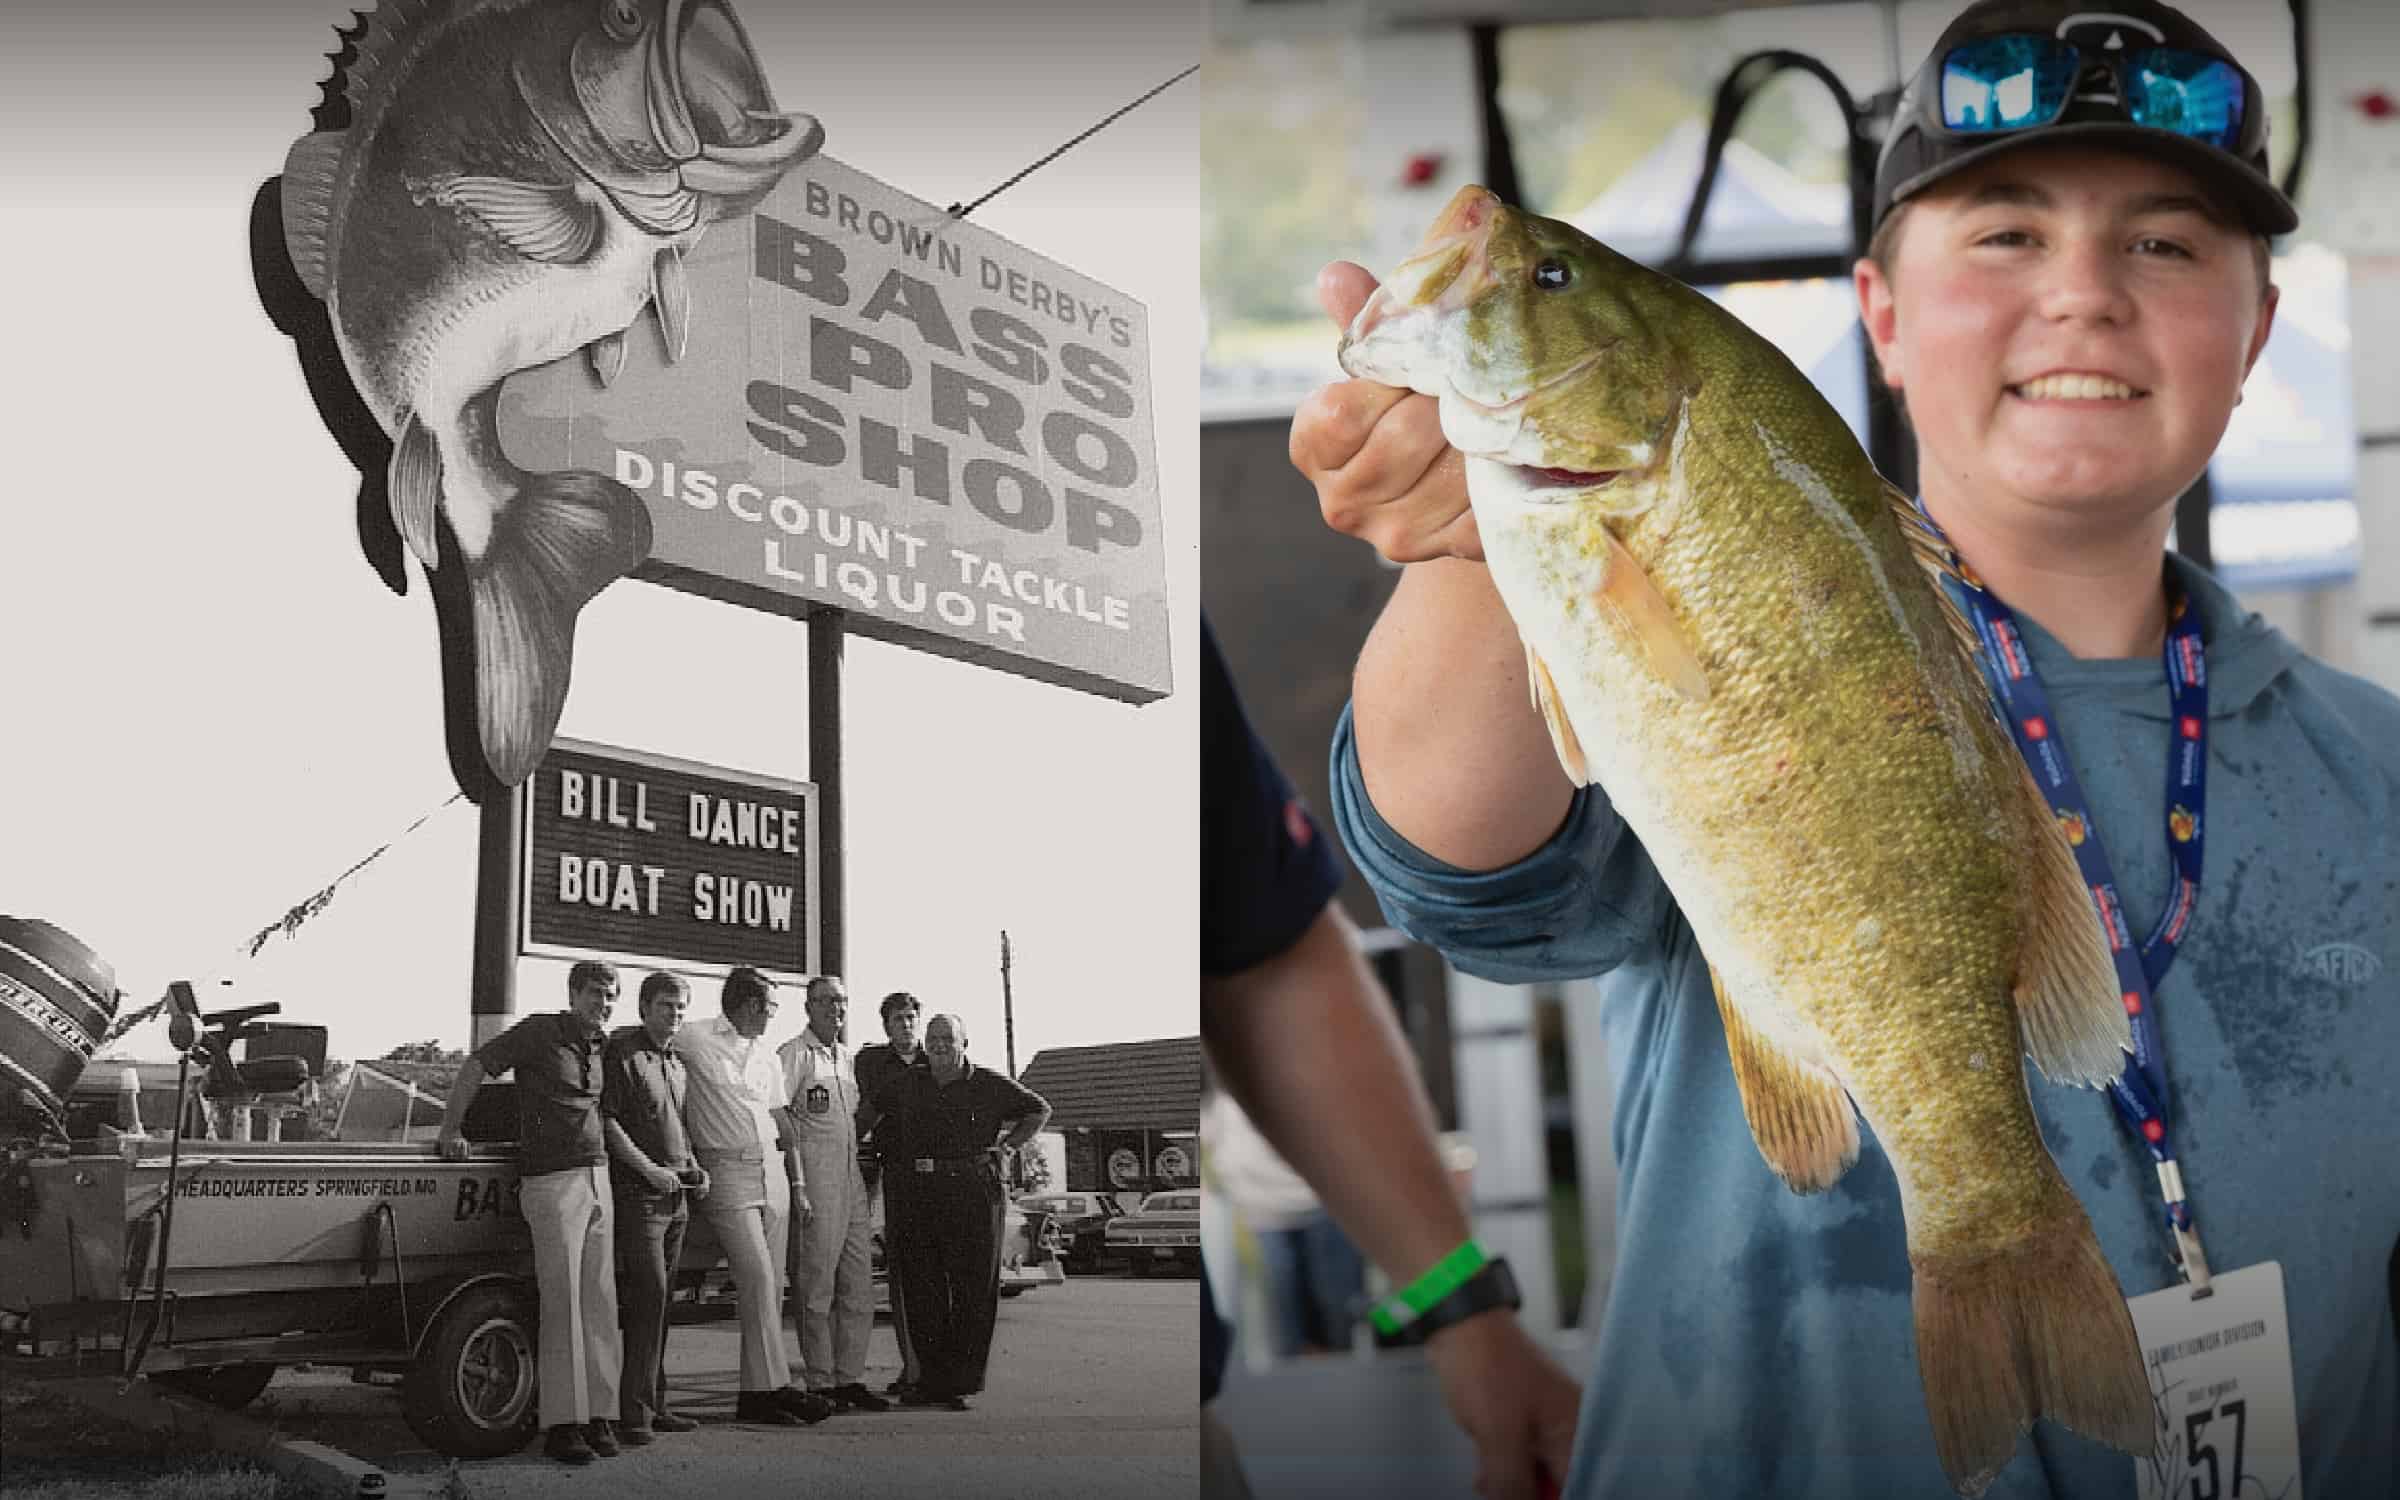 Fishing Myths  Bill Dance Outdoors 